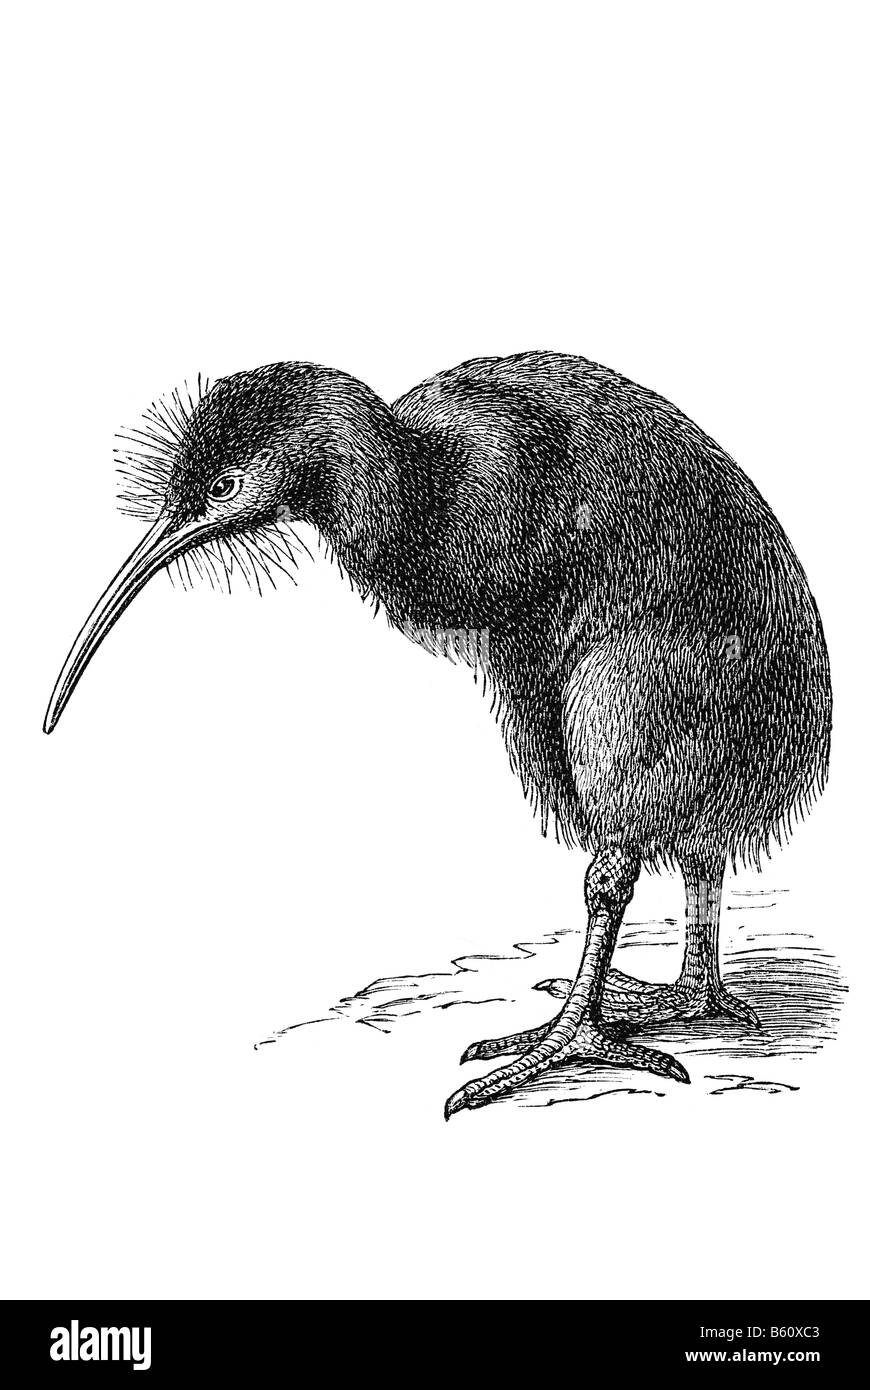 kiwis are flightless birds genus Apteryx family Apterygidae endemic to New Zealand Stock Photo